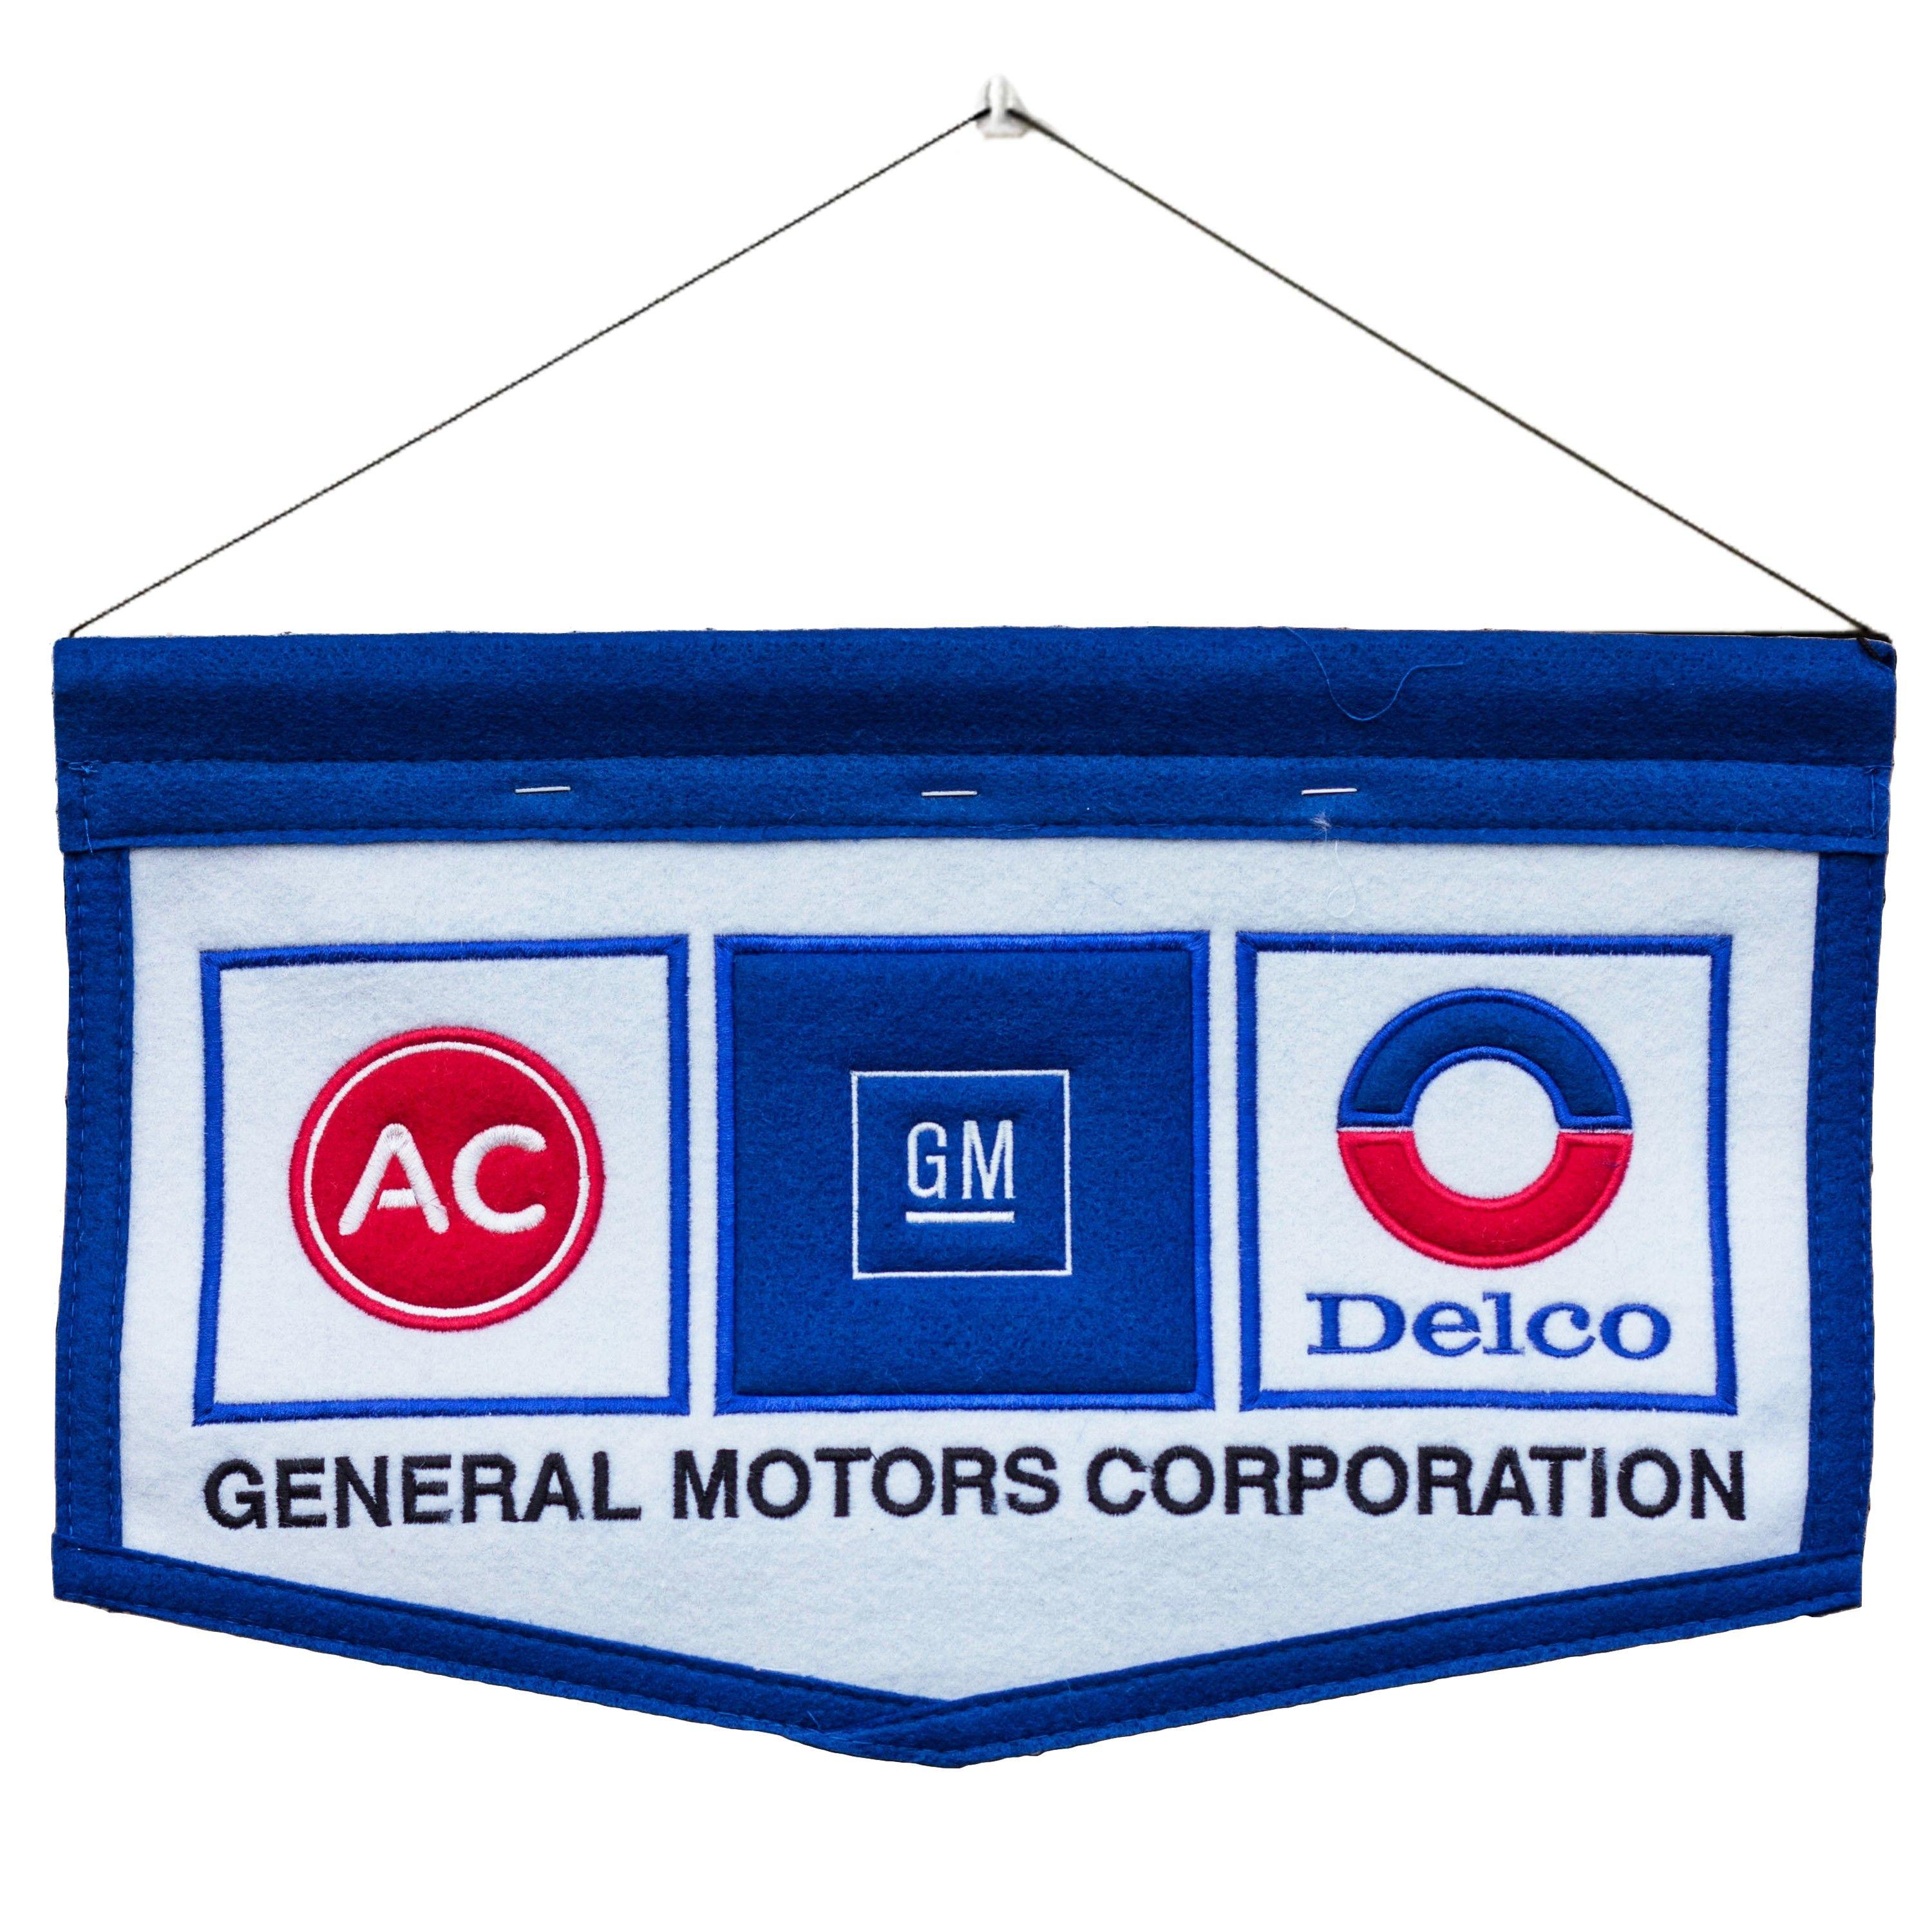 Delco Logo - AC GM Delco Wall Banner